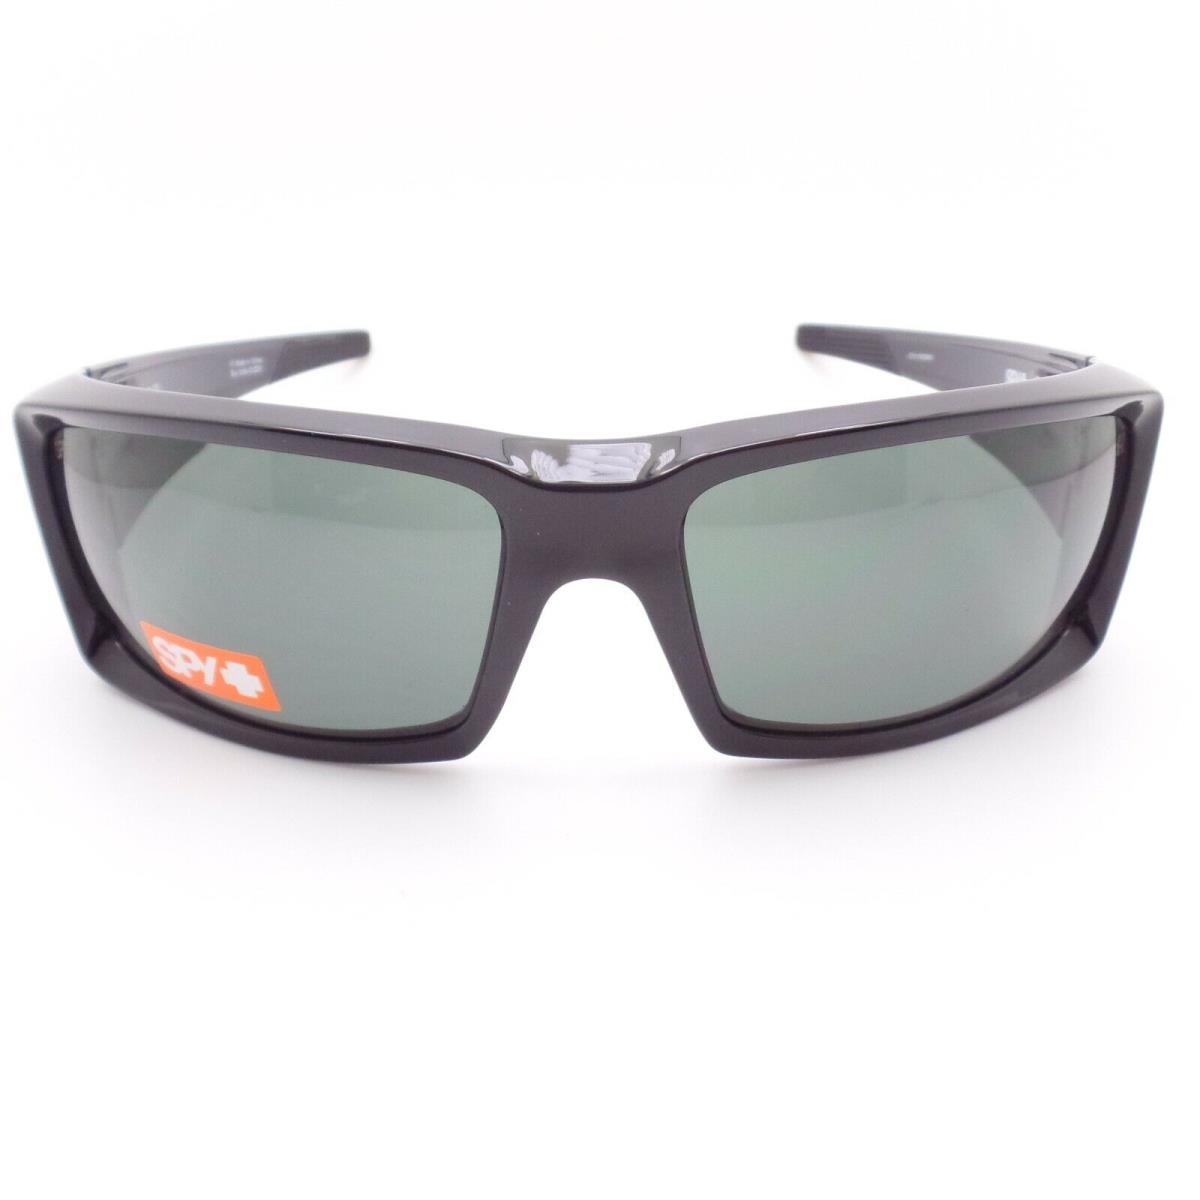 SPY Optics sunglasses General - Shiny Black Frame, Gray Green Lens 0